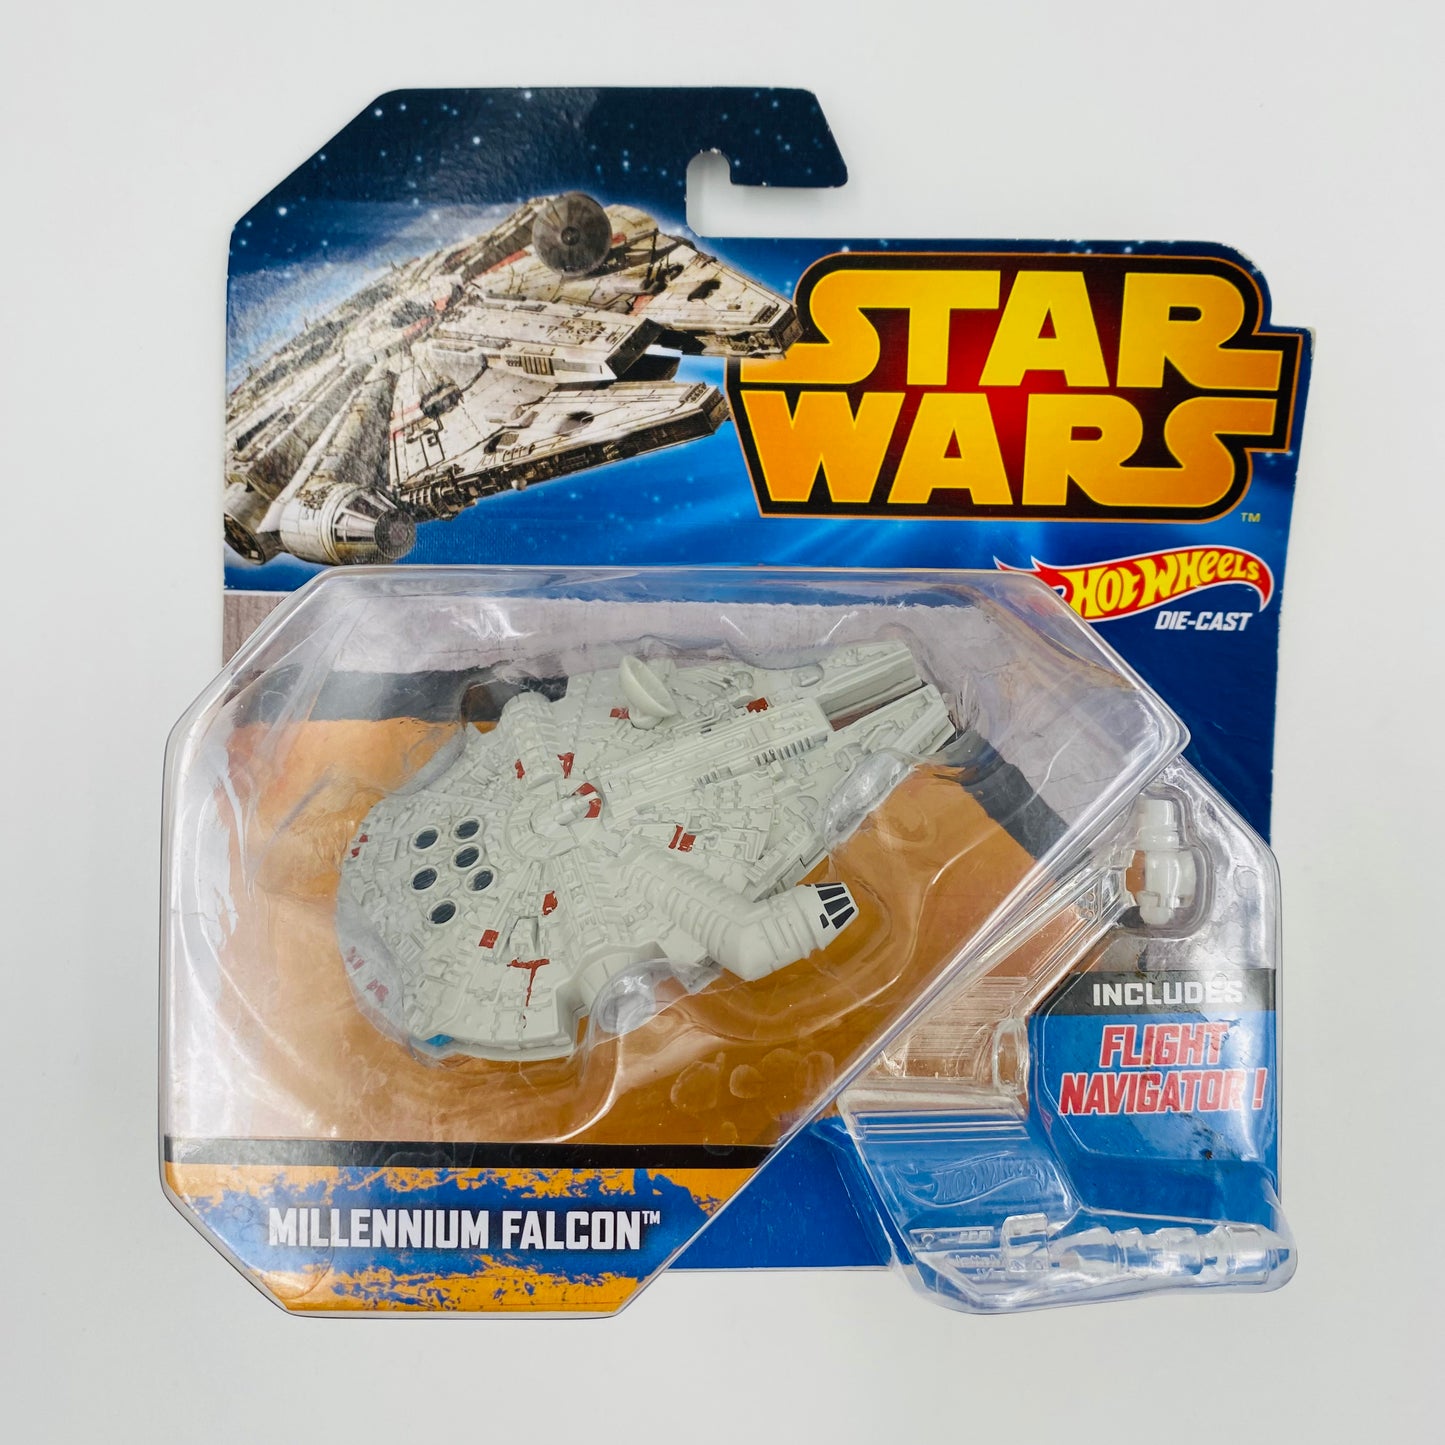 Hot Wheels Star Wars Millennium Falcon carded die-cast vehicle (2014) Mattel